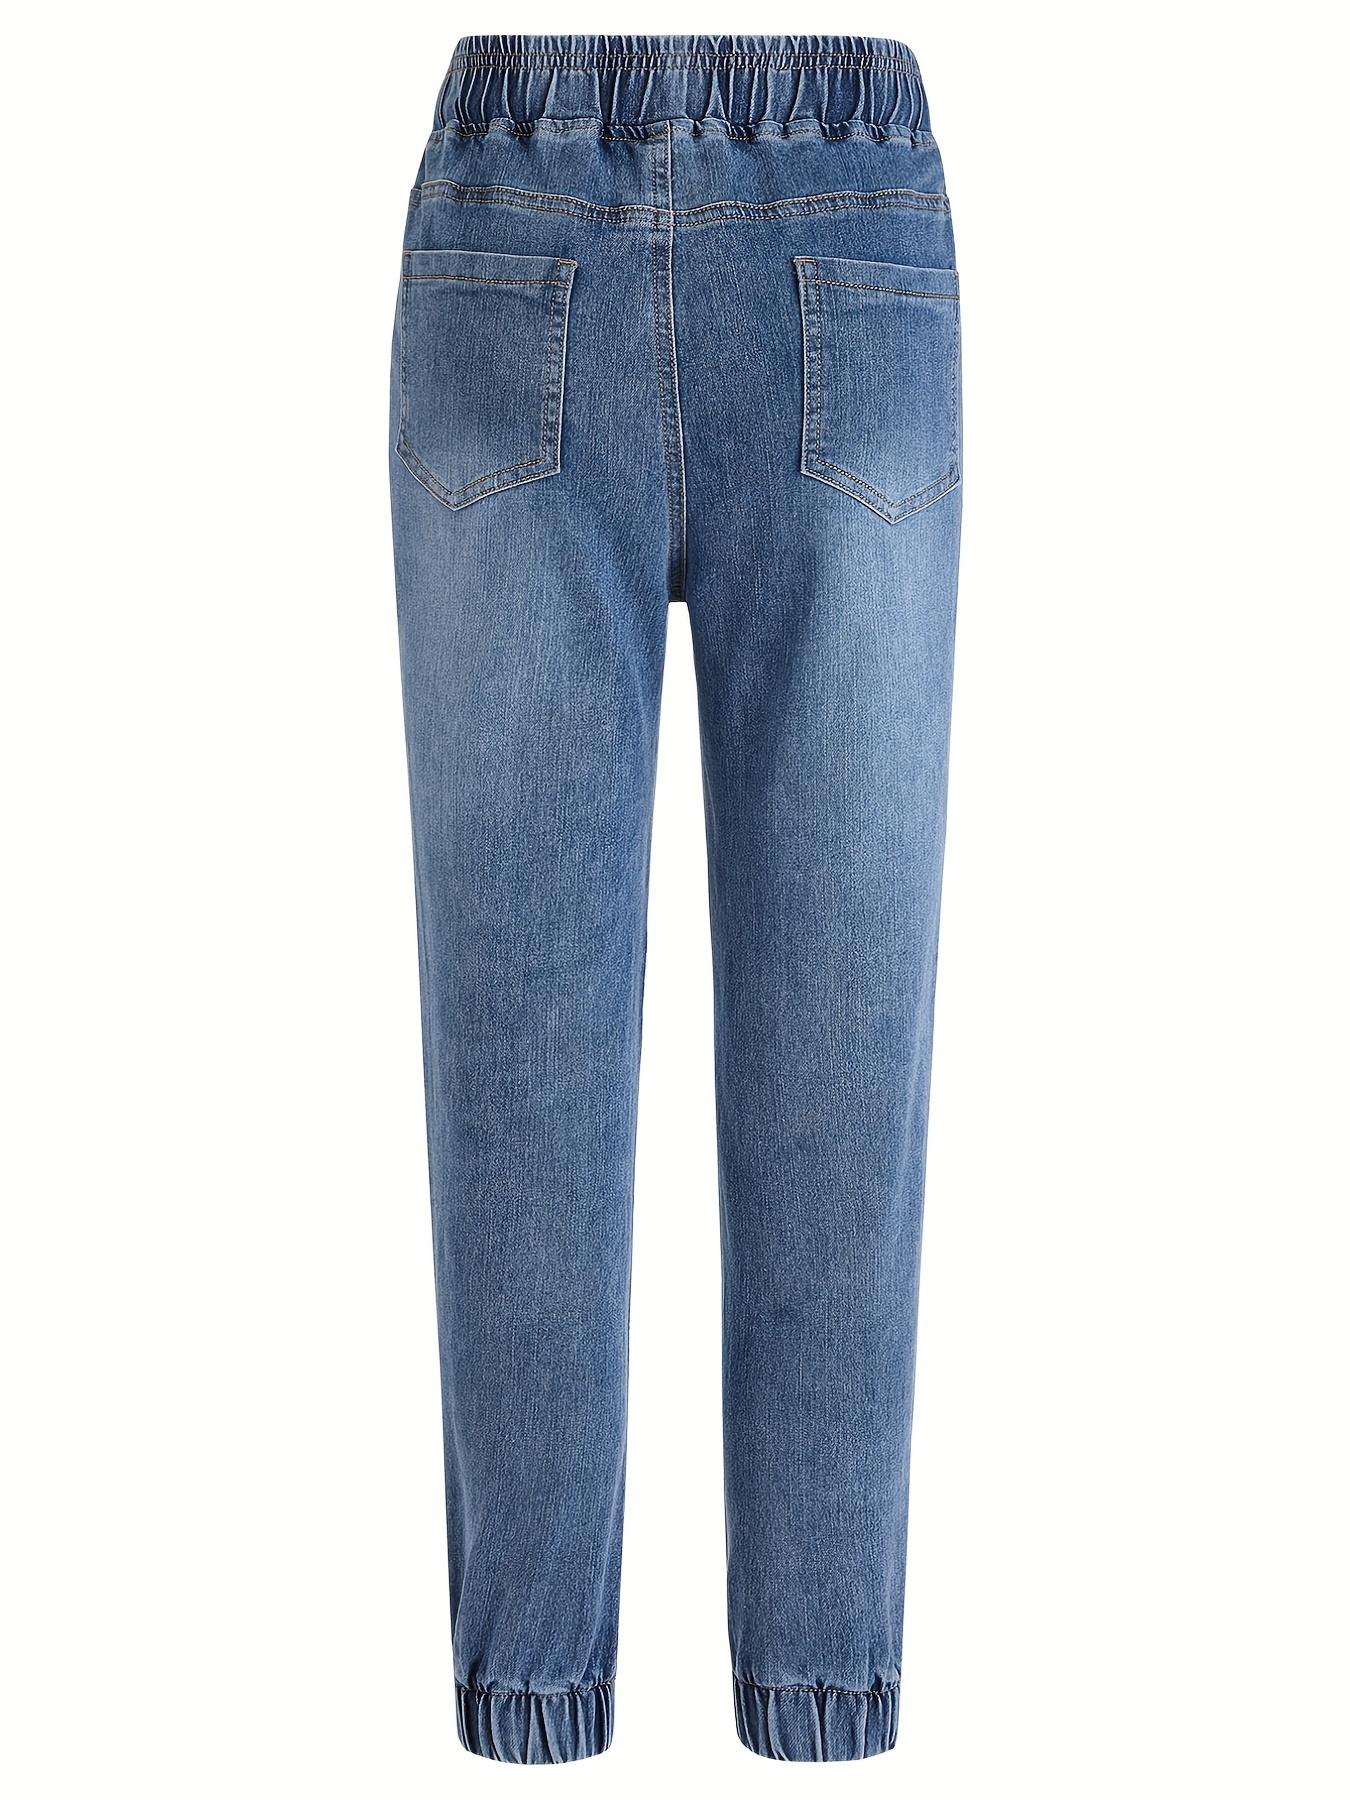 Blue Drawstring Waist Jogger Pants * Stretch Slant Pockets Casual Denim  Pants, Women's Denim Jeans & Clothing